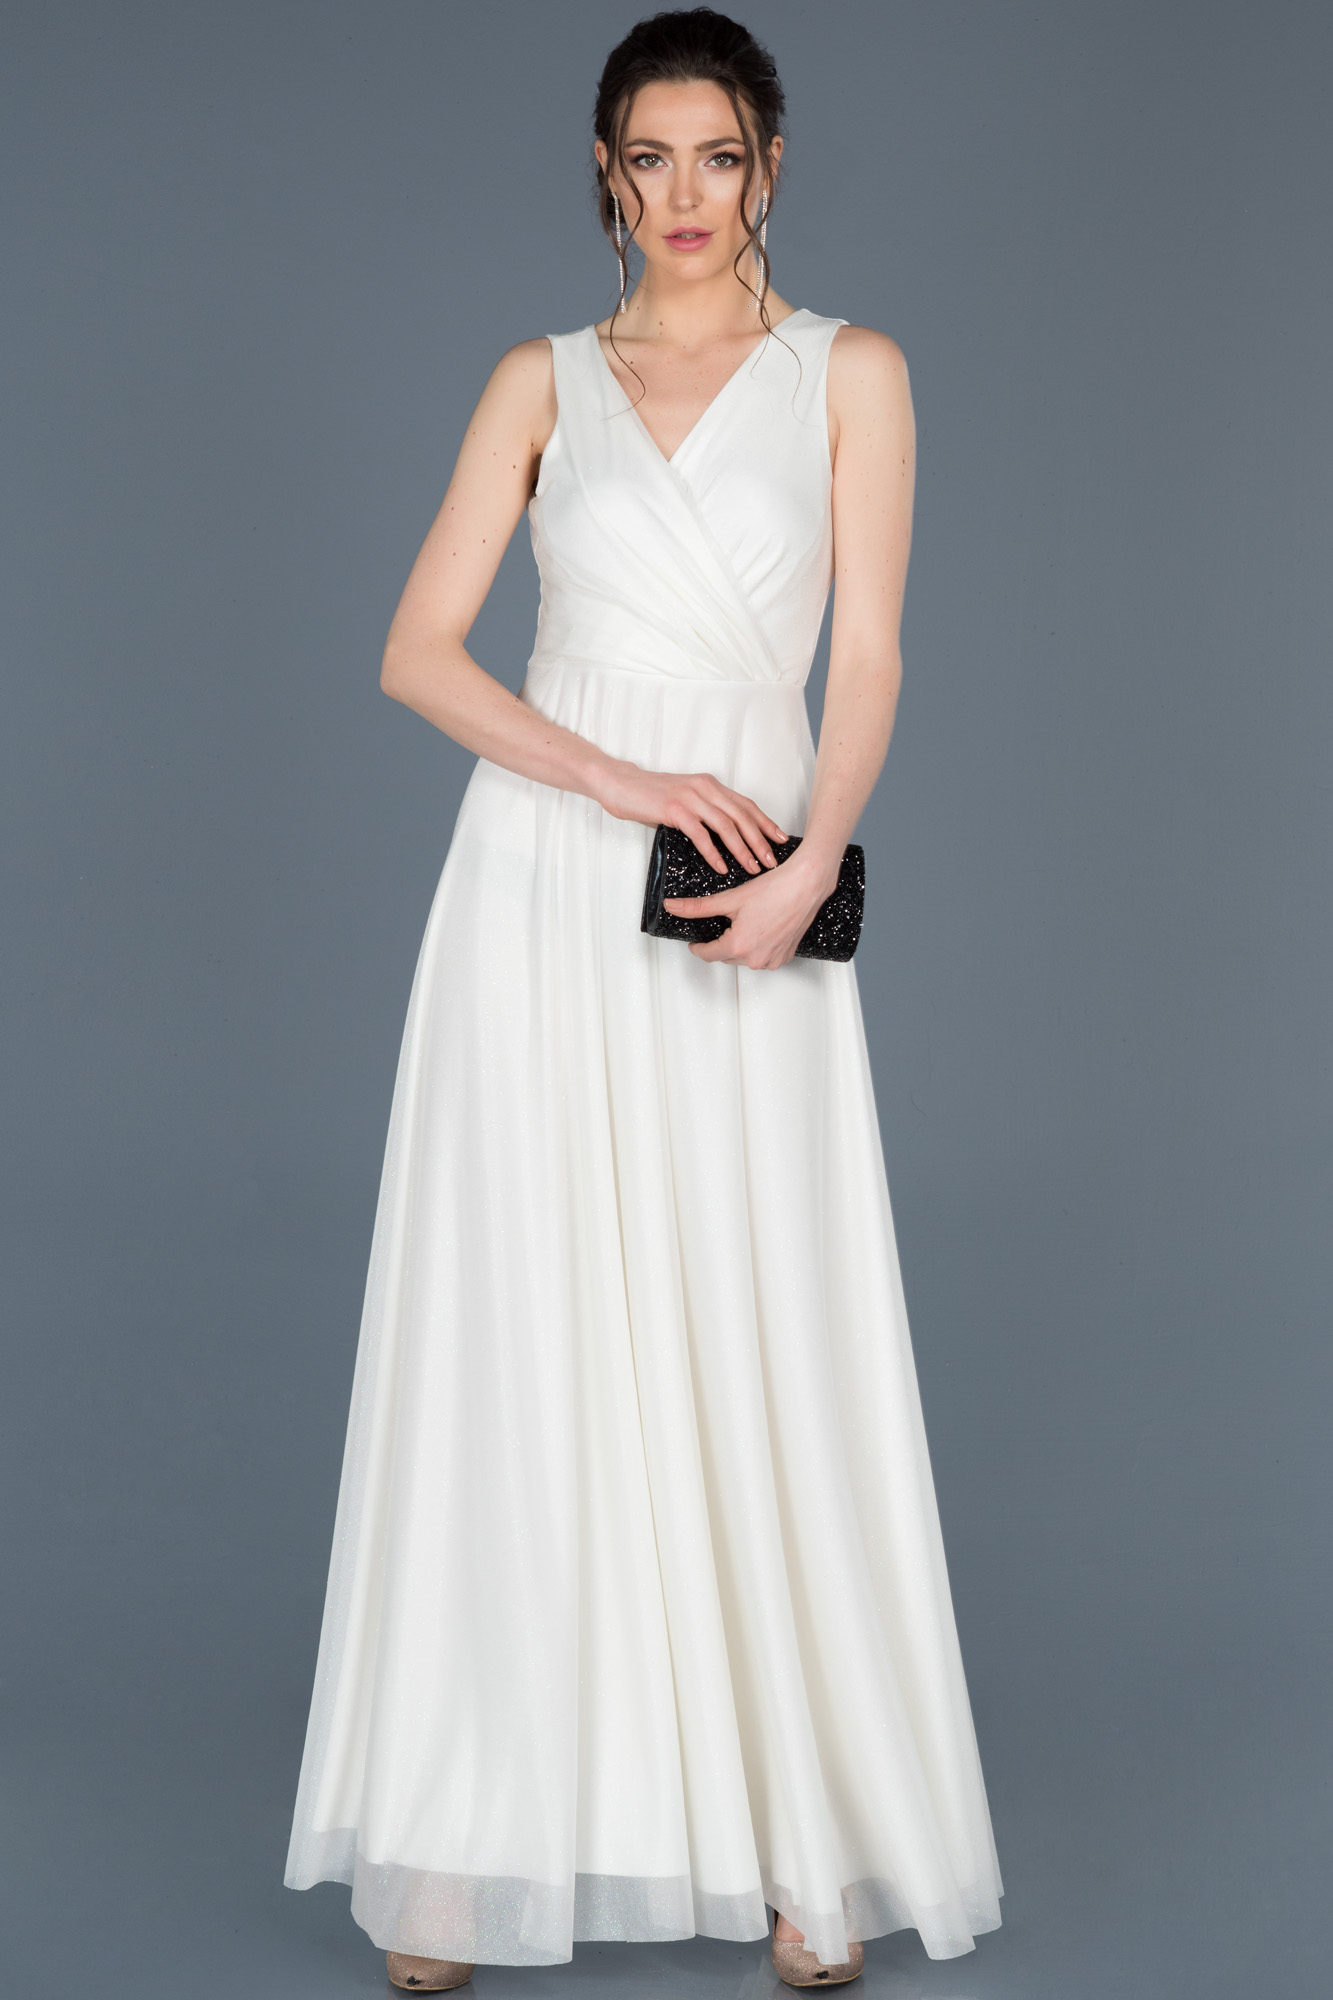 white engagement dress